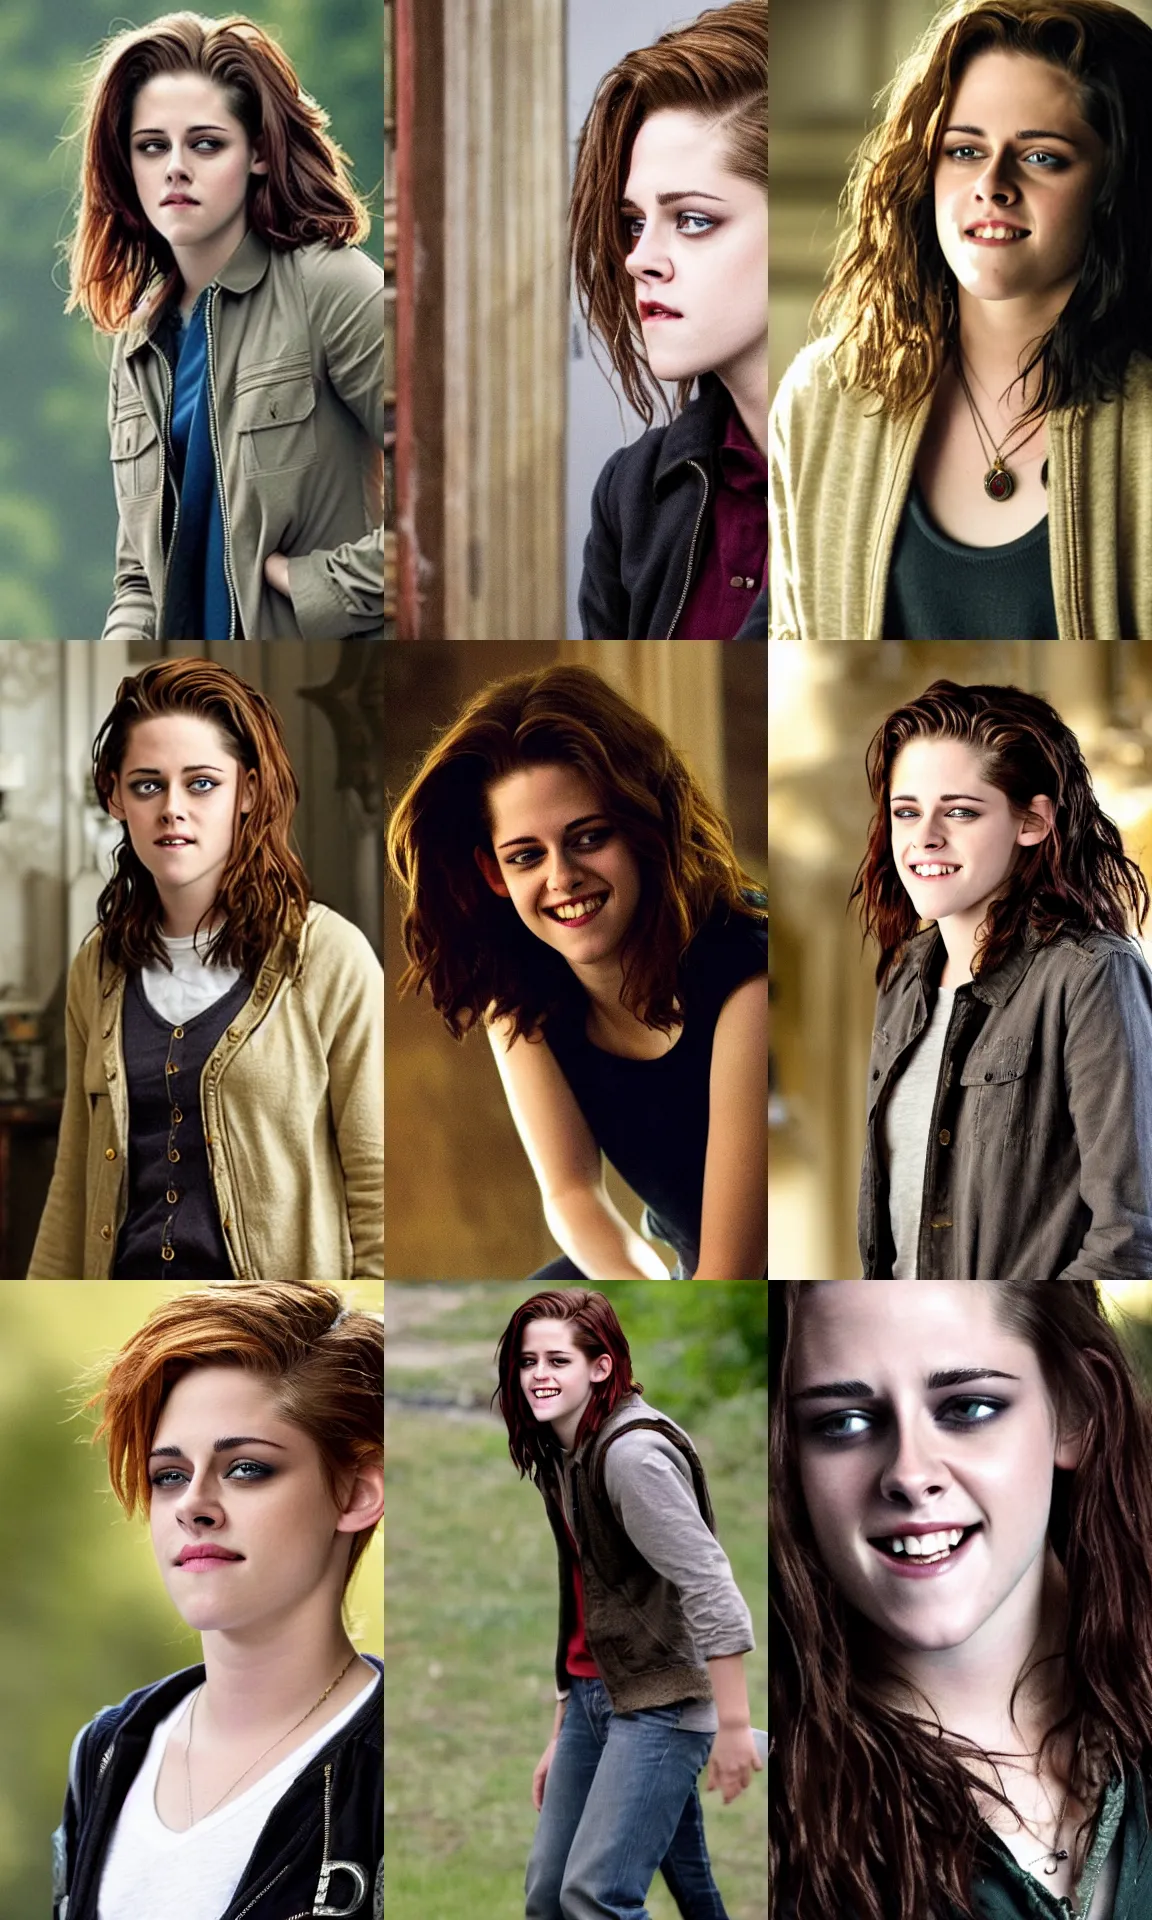 Prompt: Kristen Stewart as Hermione Granger, smiling